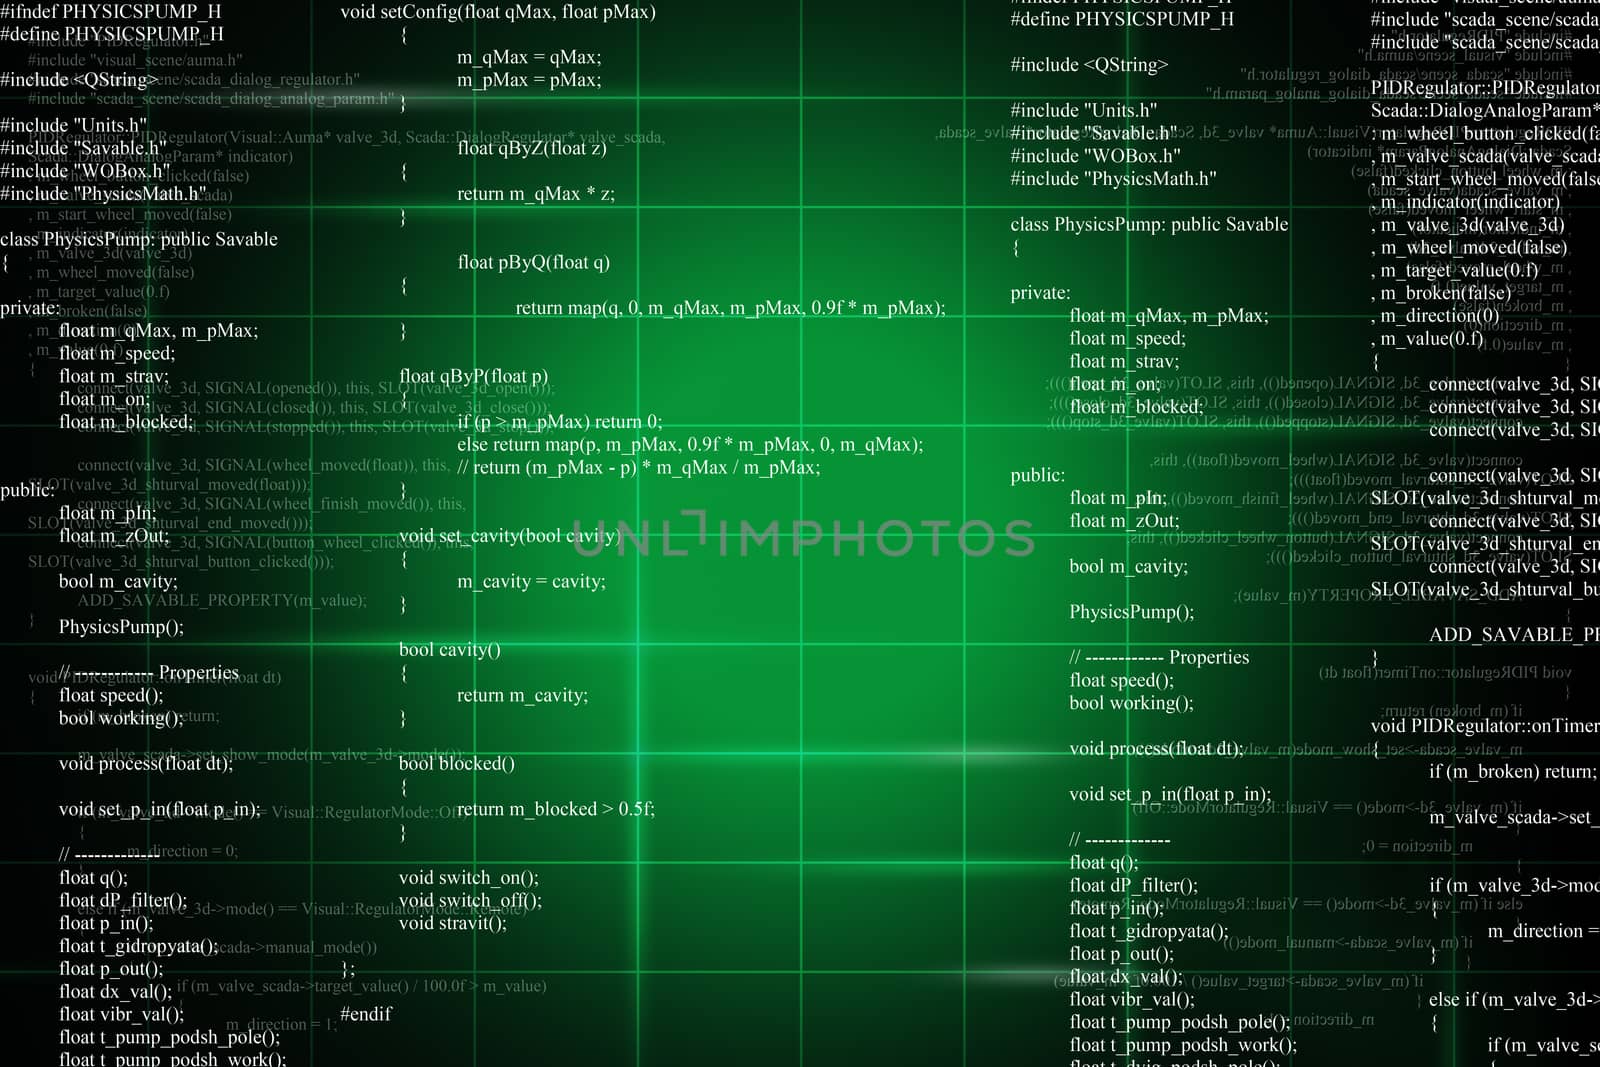 Green binary code on dark background. Computer concept